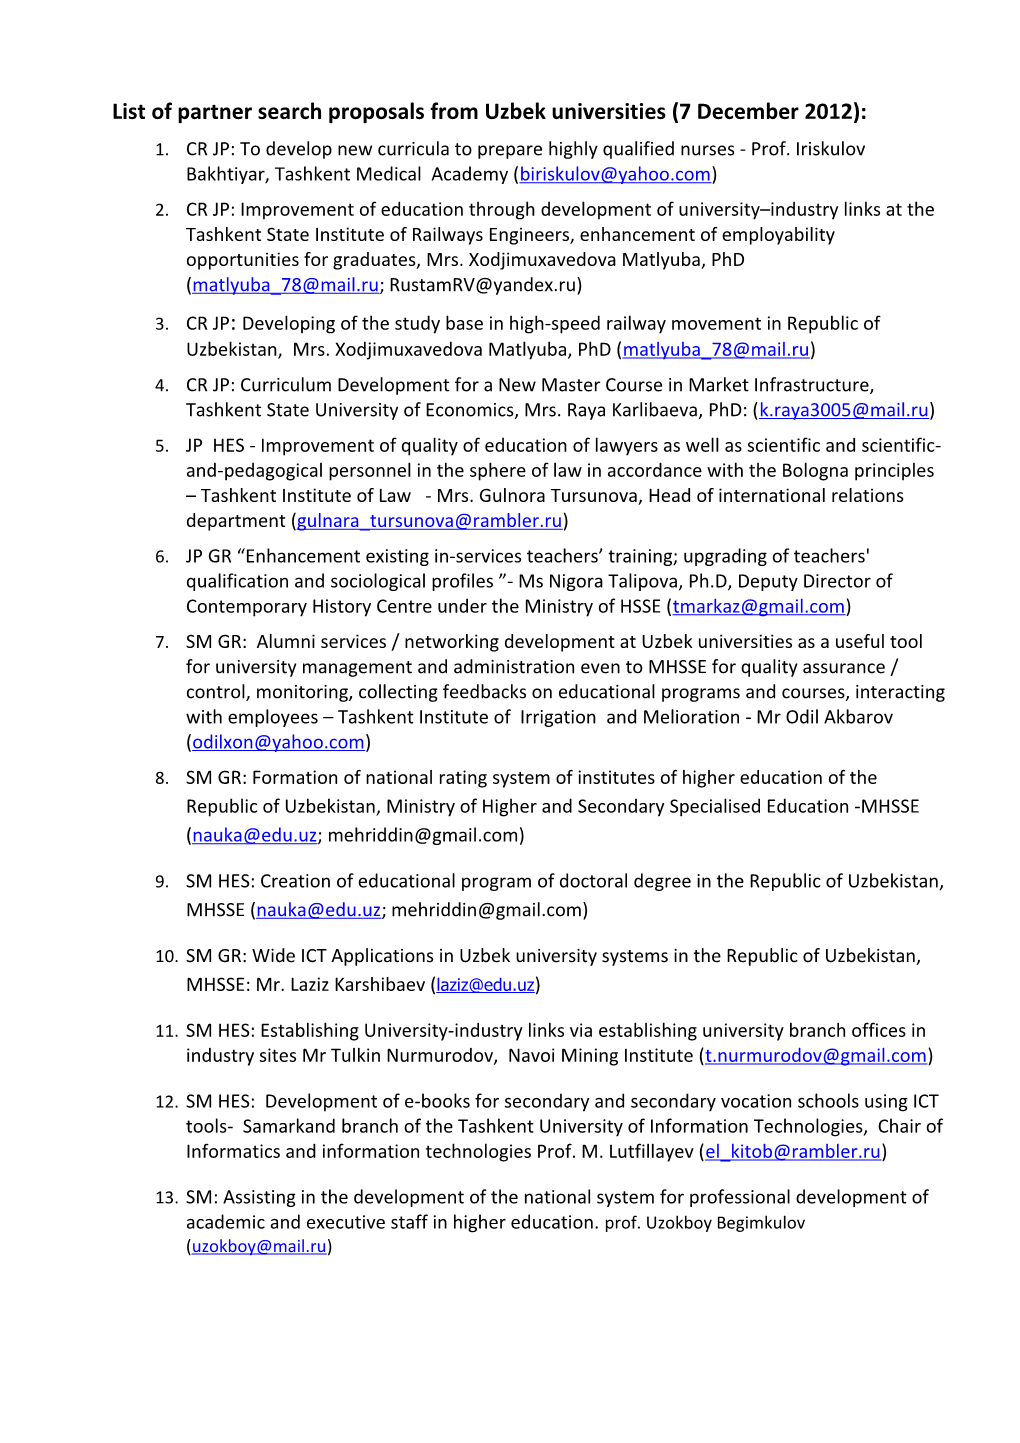 List of Partner Search Proposals from Uzbek Universities (7 December 2012)